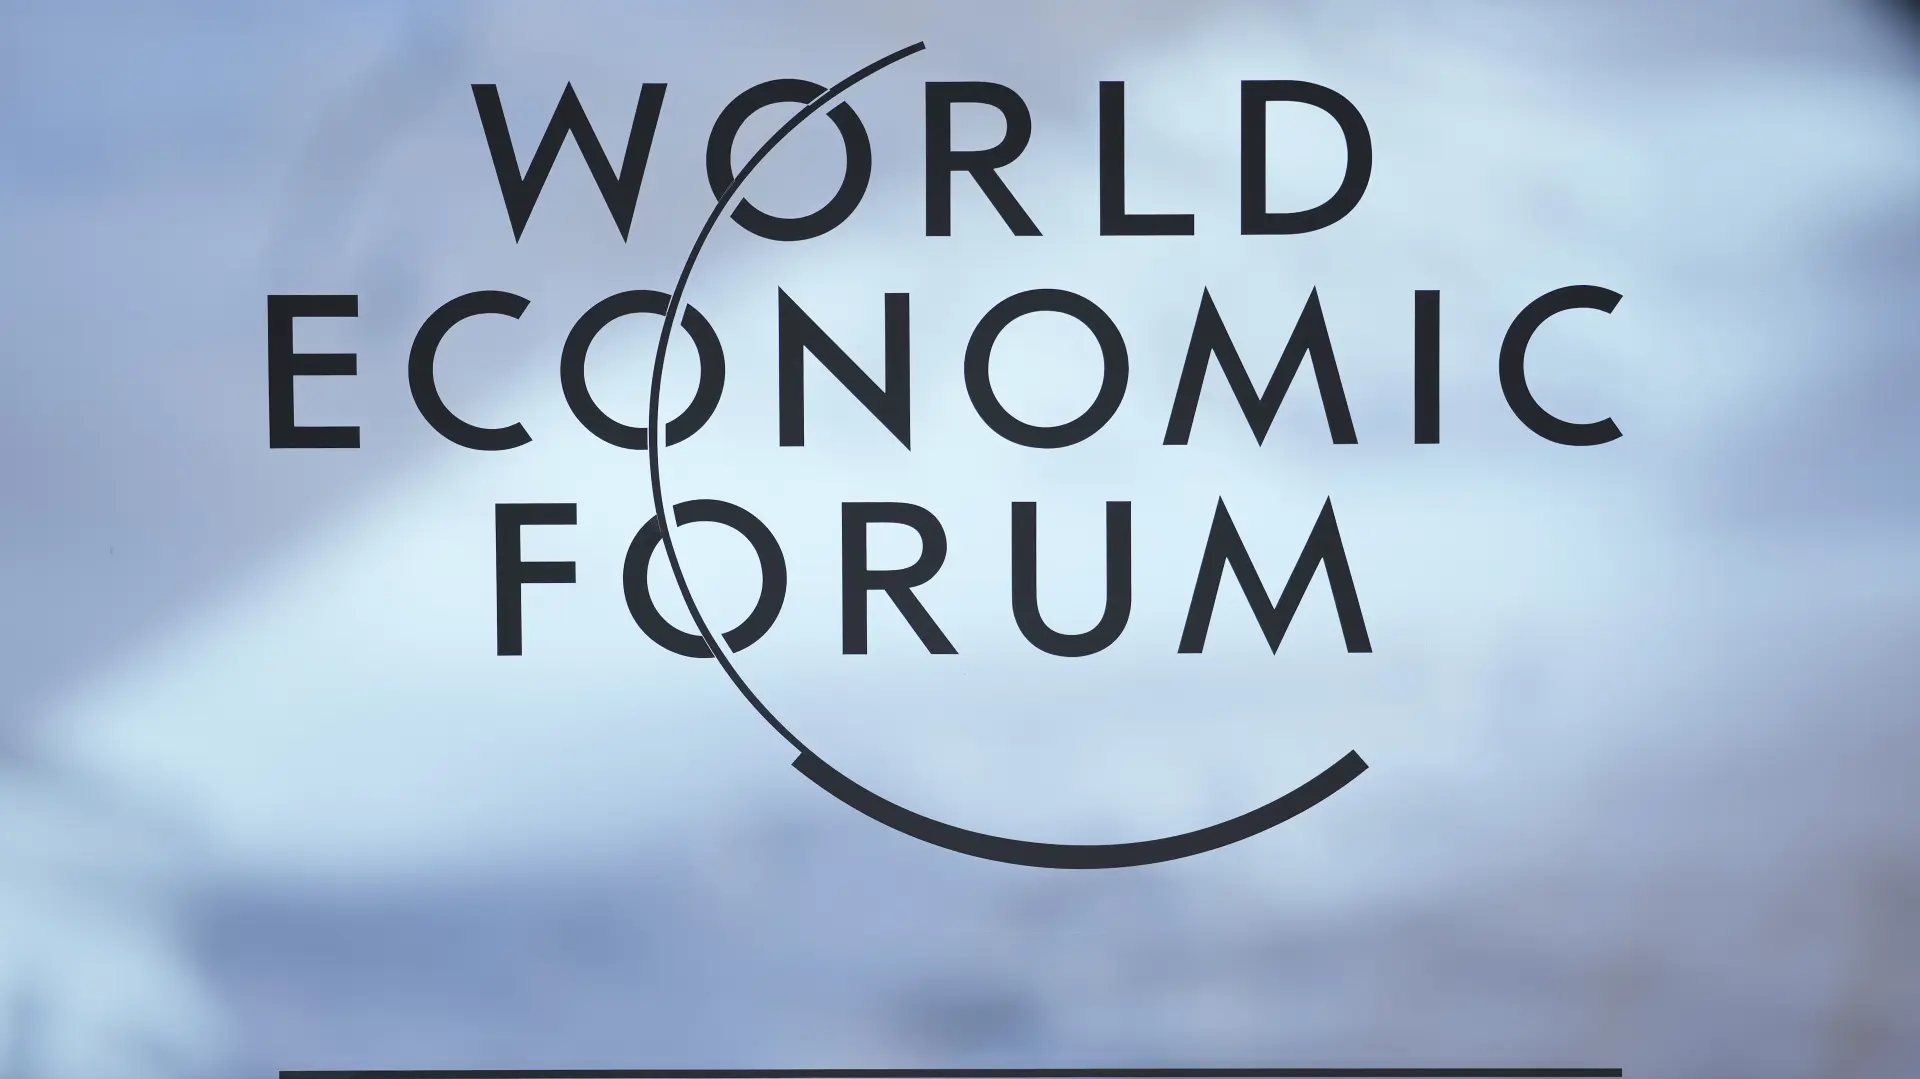 svetski ekonomski forum davos aP PhotoMarkus Schreibera-65a3fb13ef42a.webp